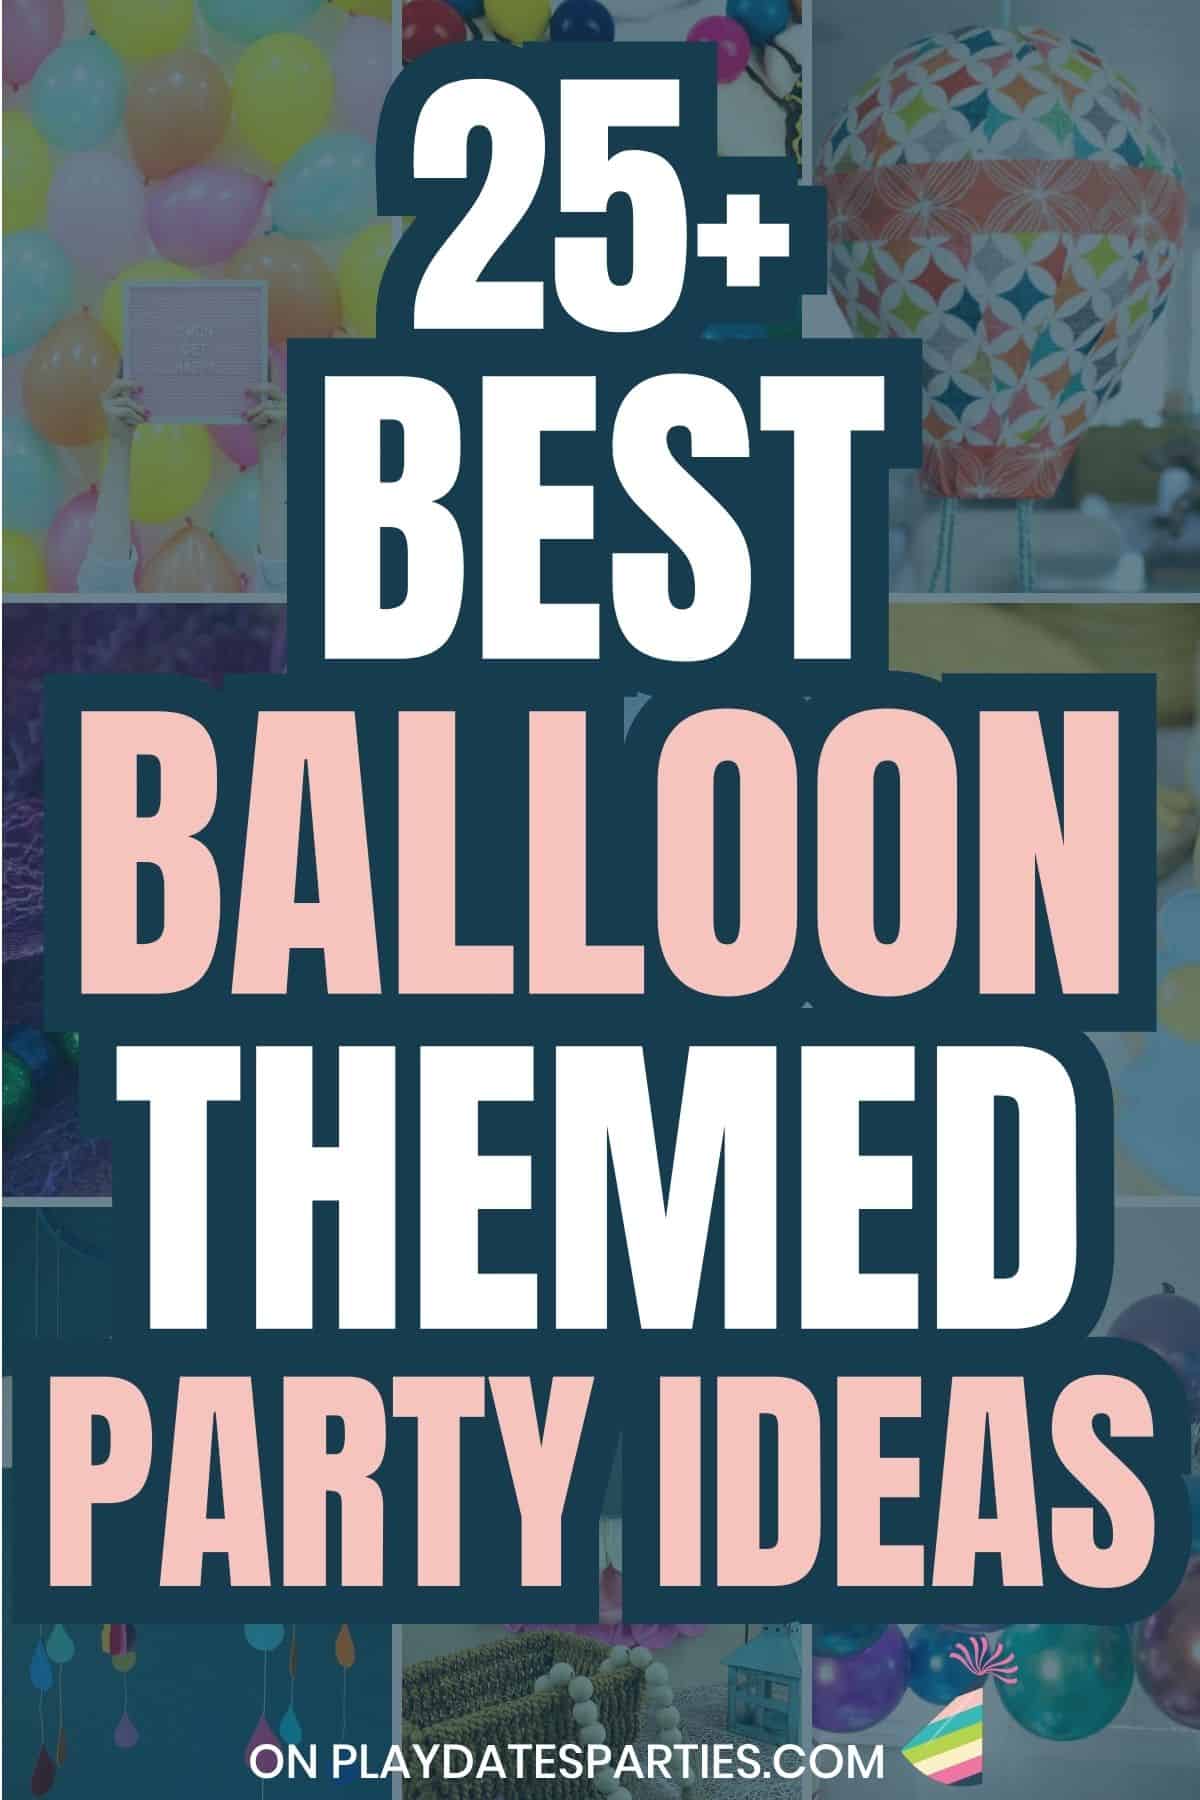 Best Balloon Themed Party Ideas.